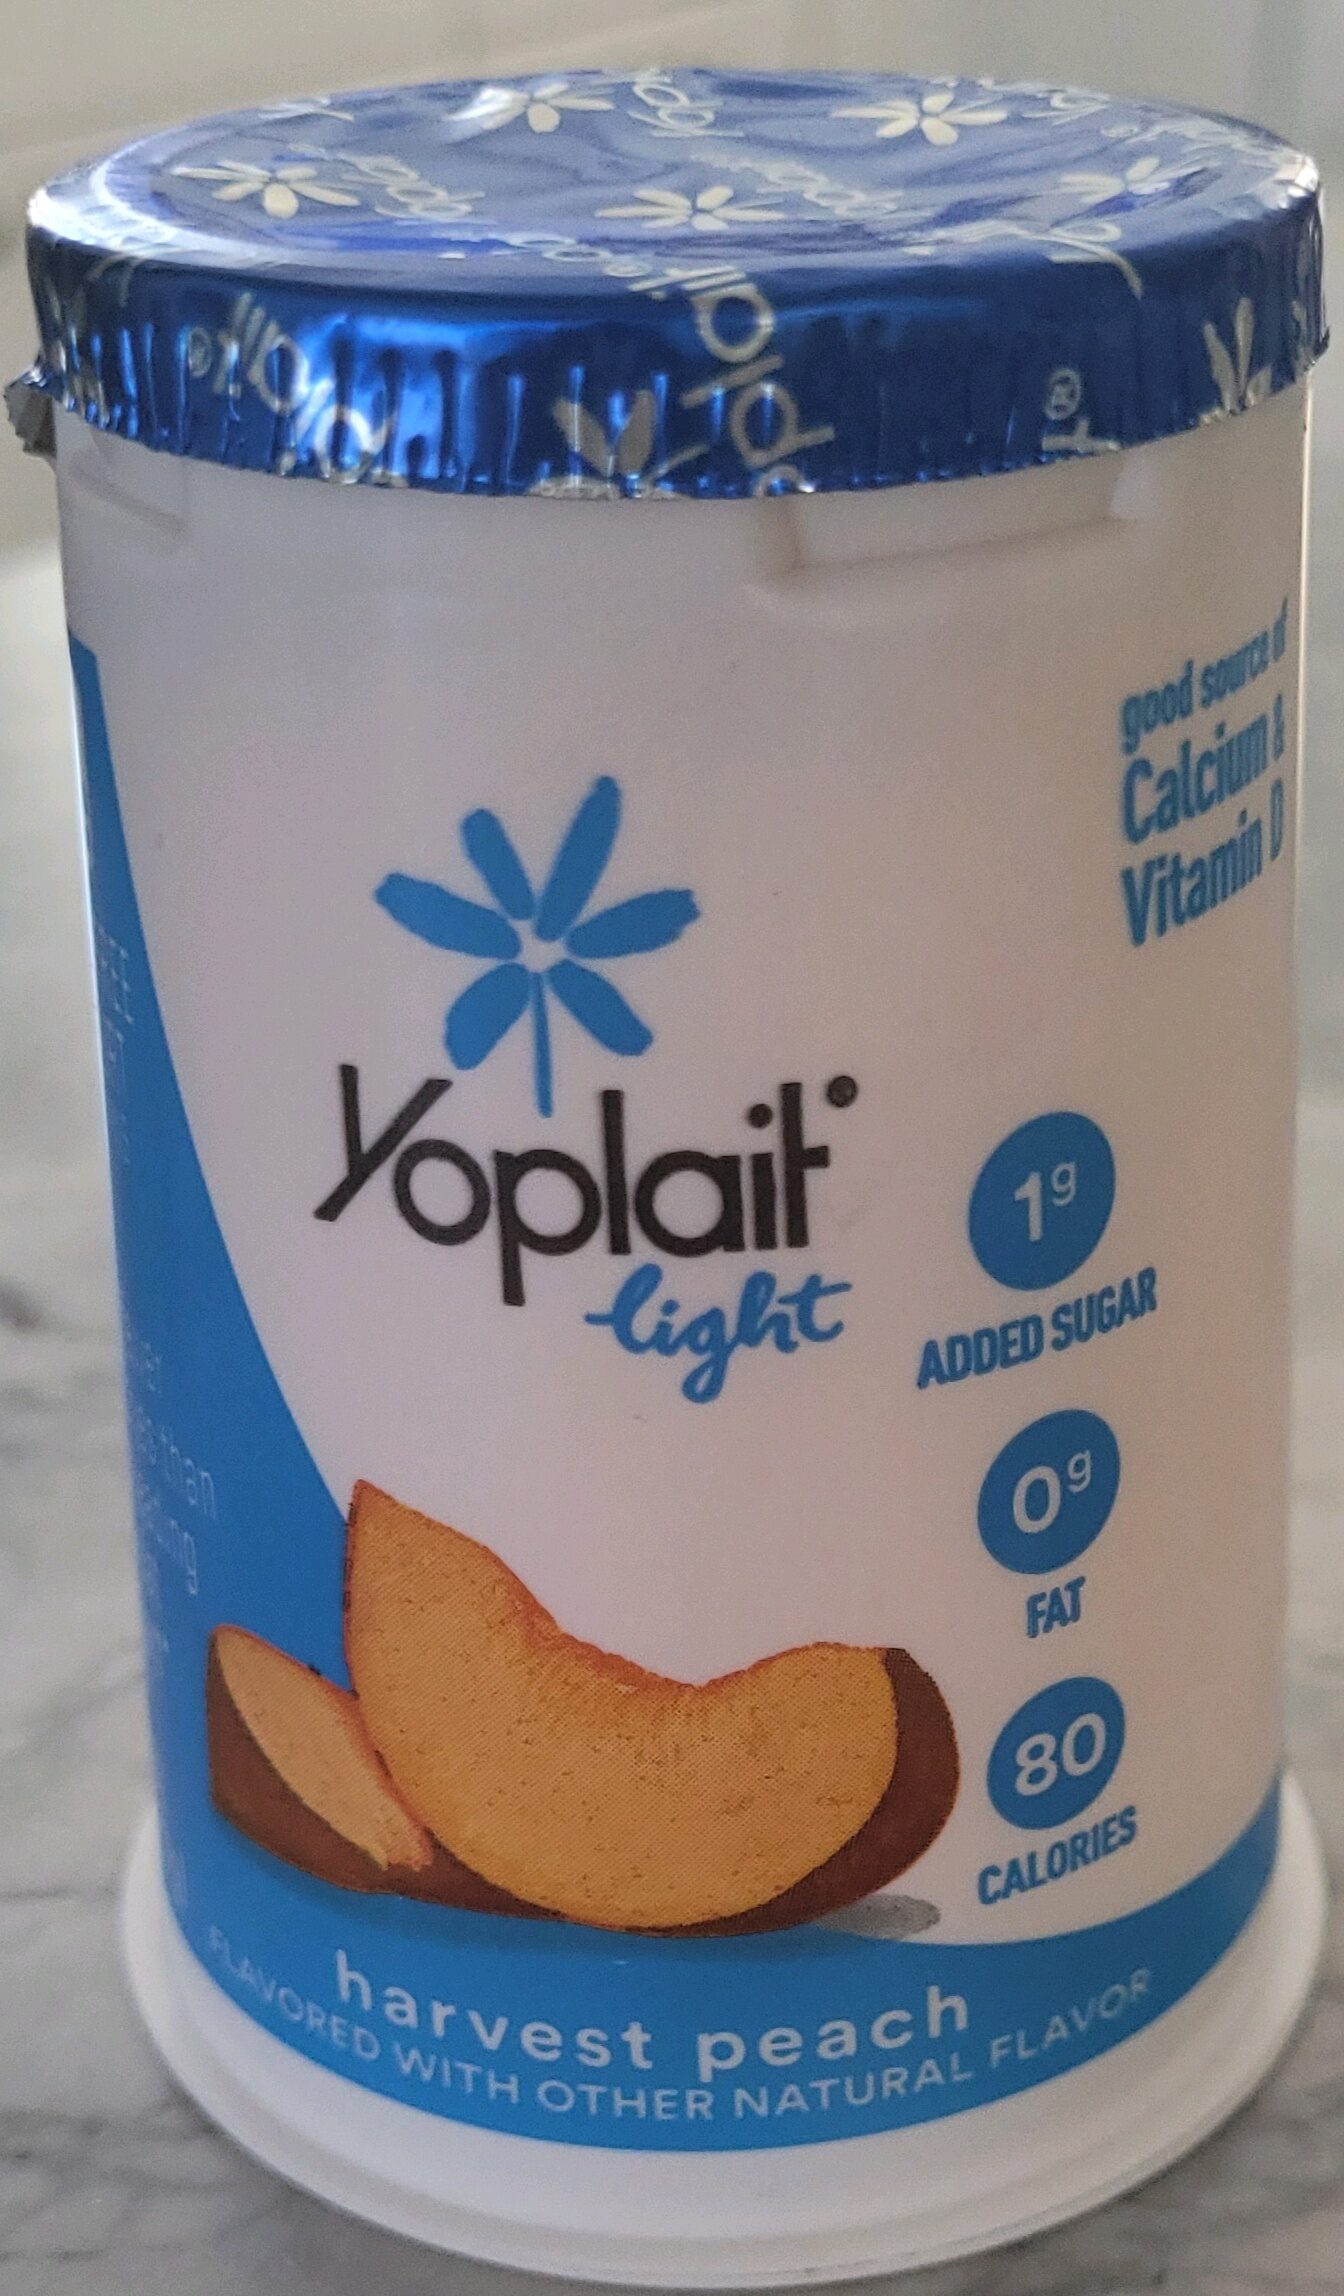 Yoplait Light Harvest Peach Fat Free Yogurt - Product